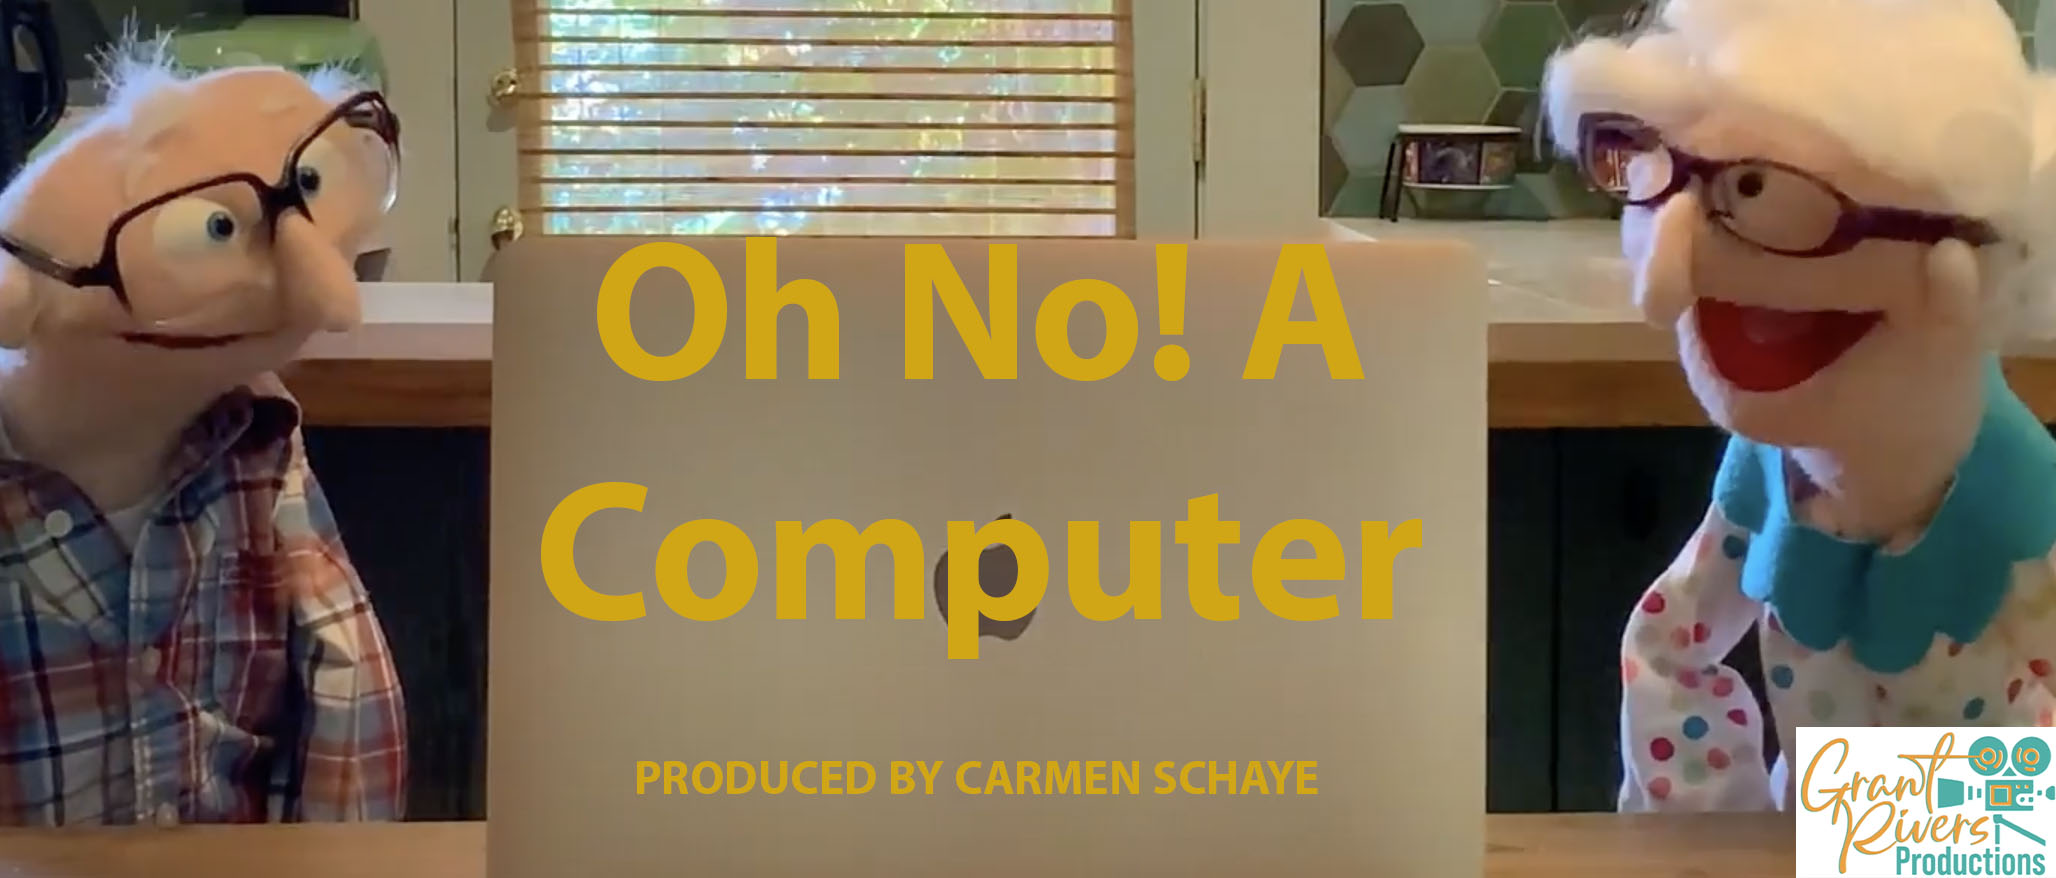 Oh no A Computer